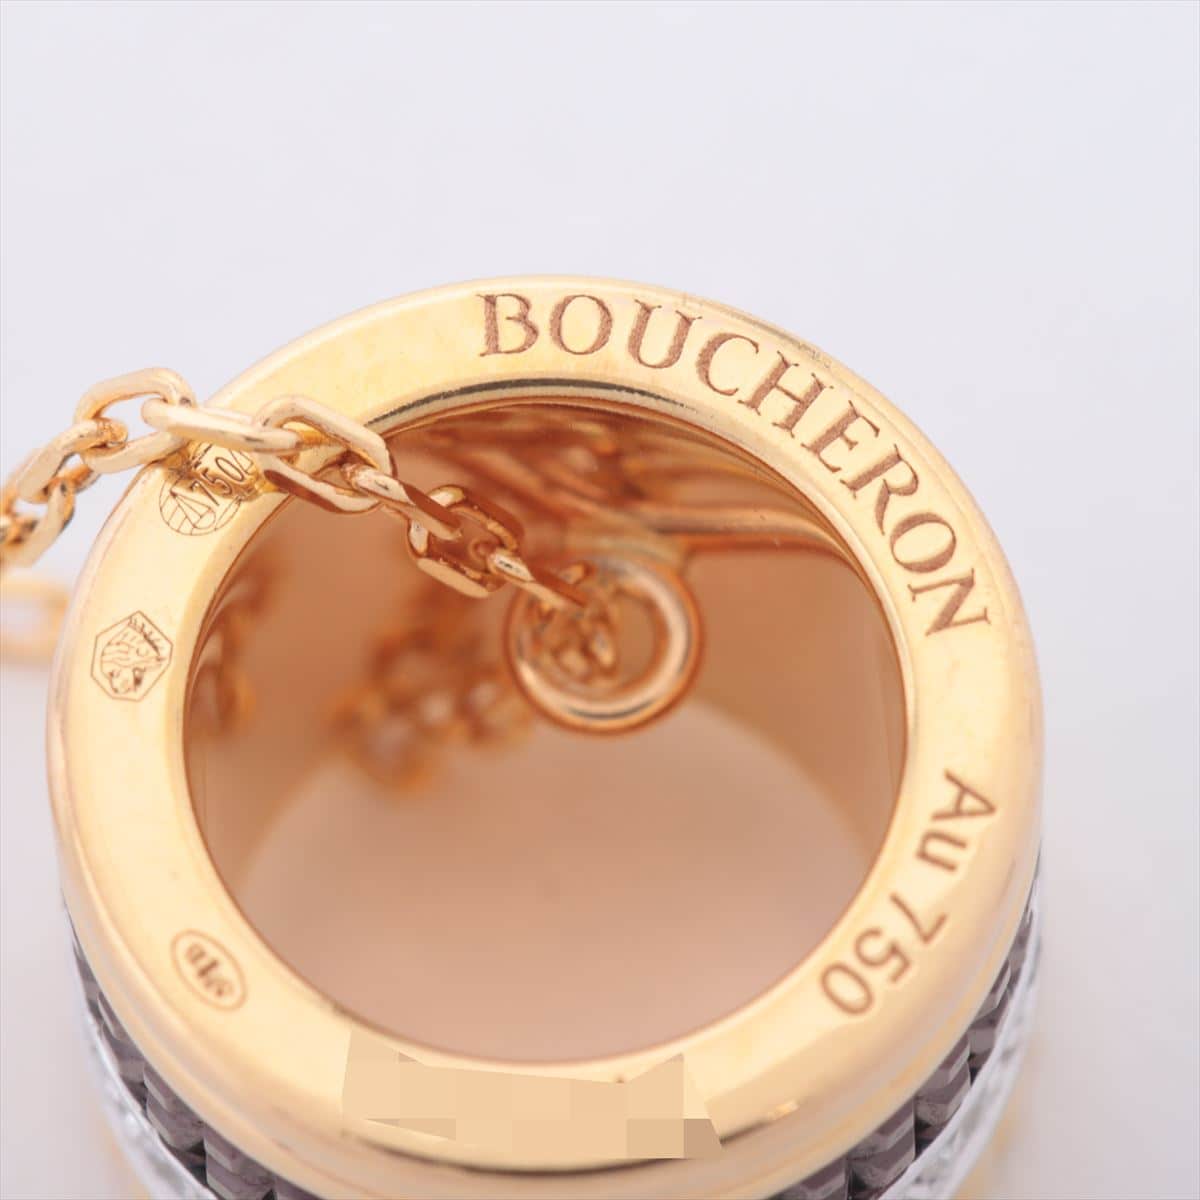 Boucheron Quatre Classic diamond Necklace 750 YG×PG×WG 6.2g